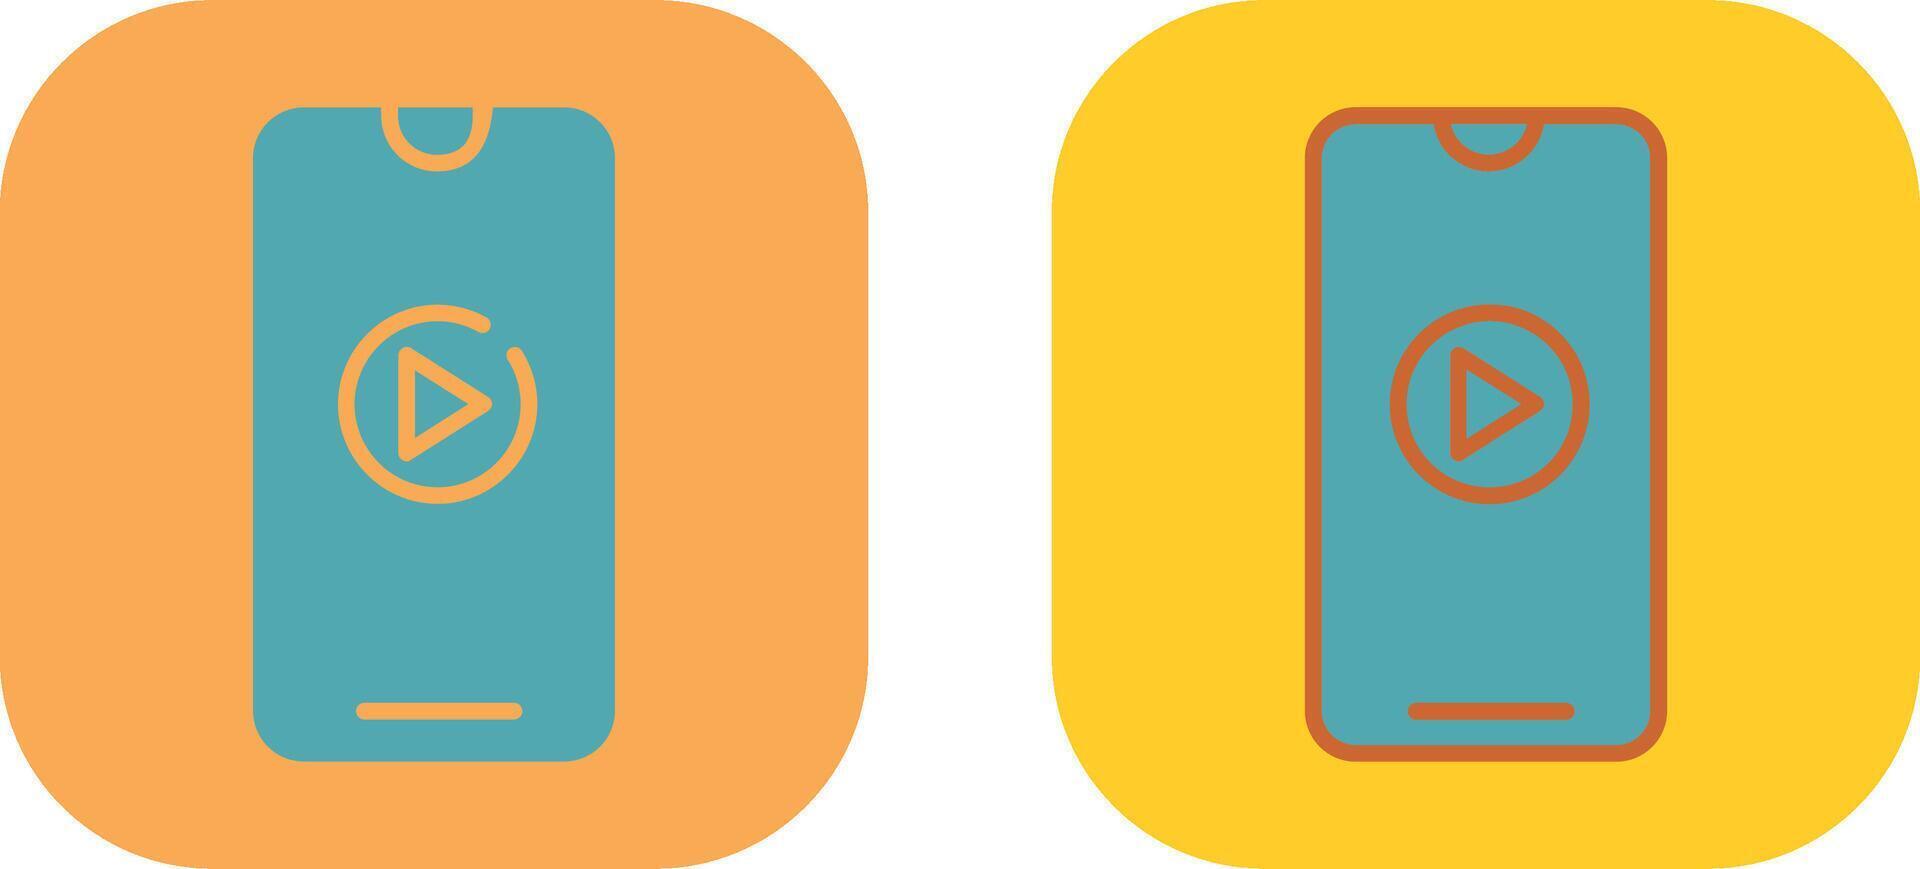 Phone Icon Design vector